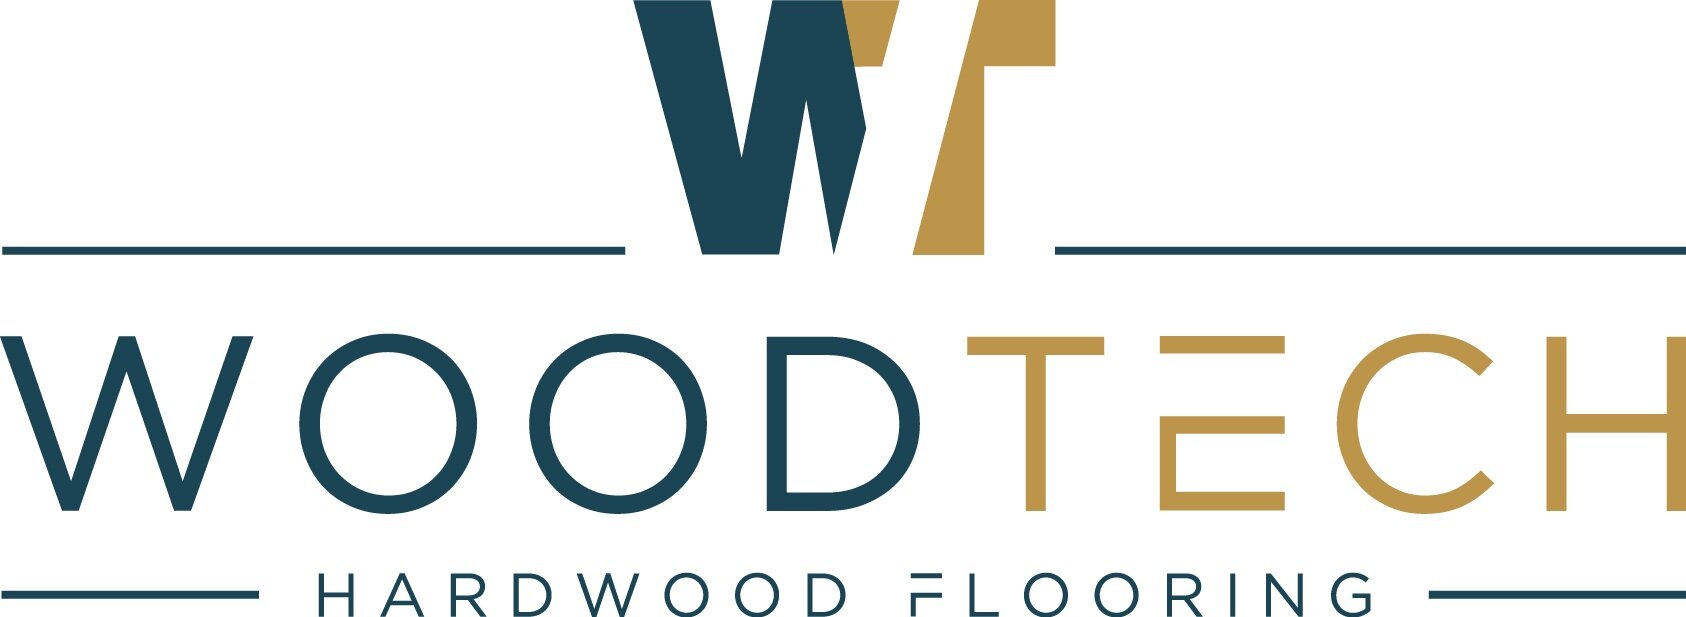 Wood Tech Hardwood Flooring | West Michigan’s Professional Hardwood Floor Refinishing, Installation &amp; New Wood Flooring Sales